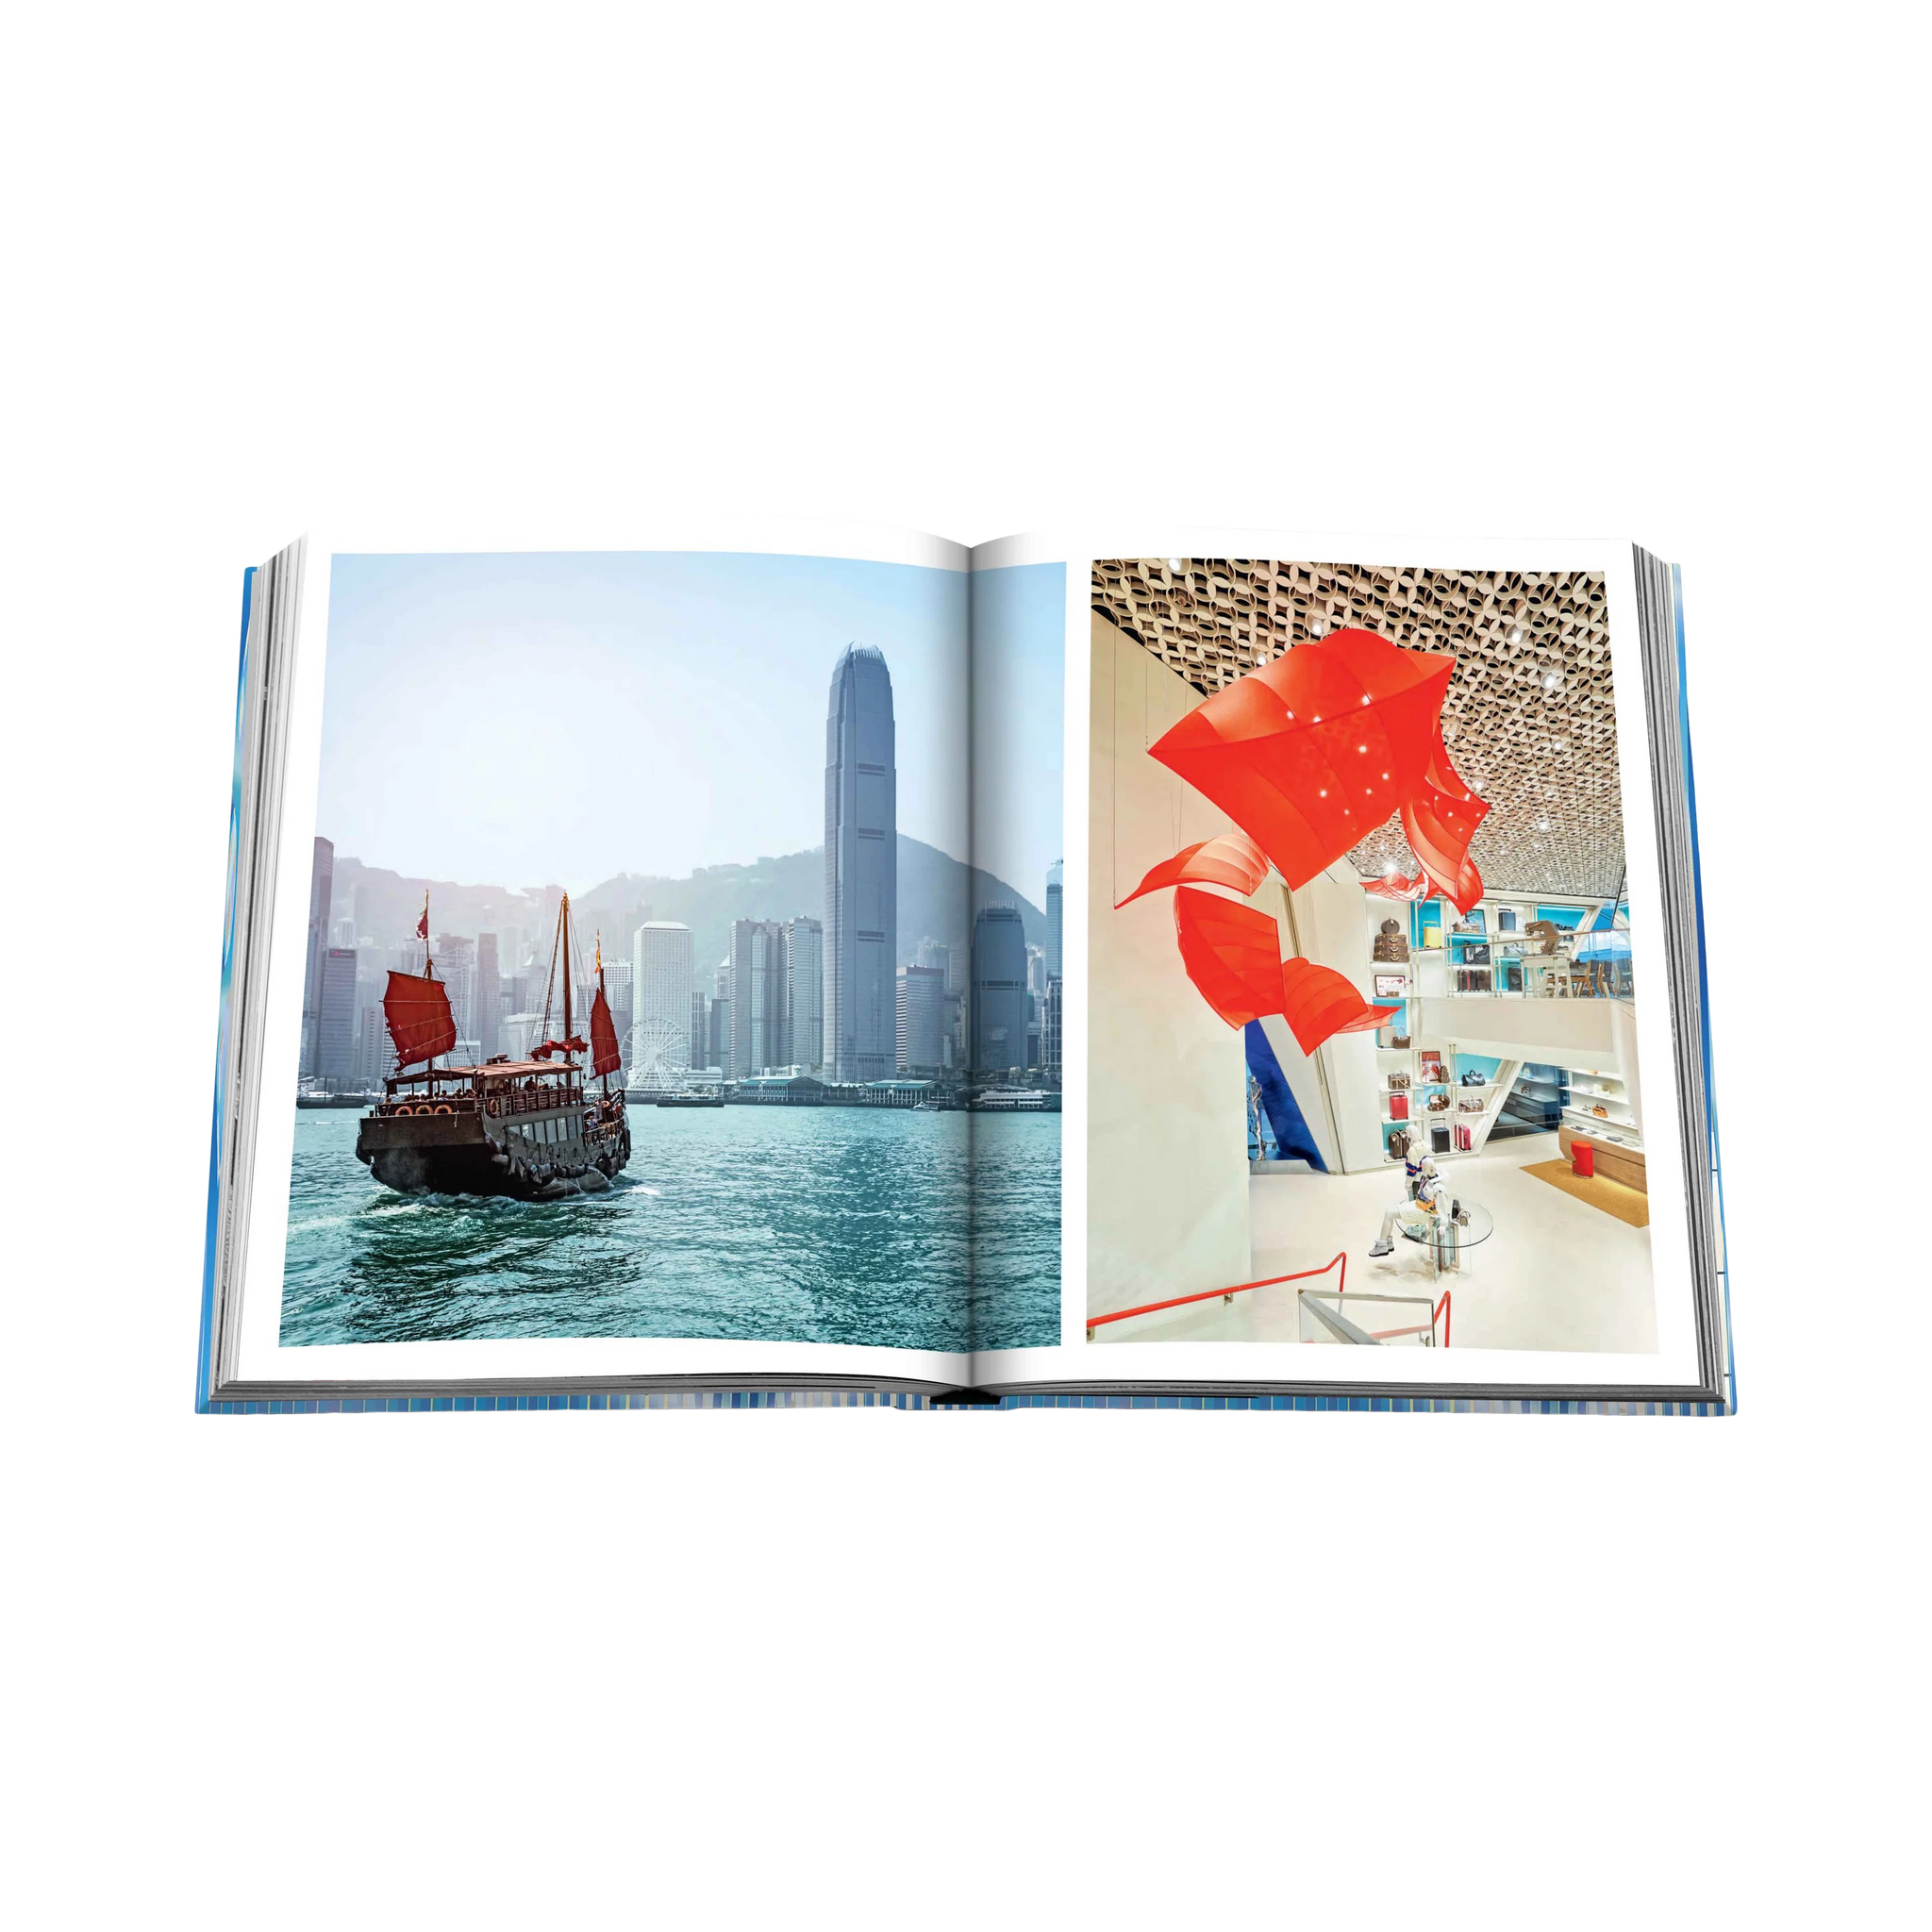 89489 Assouline Louis Vuitton Skin (New York City) Coffee table book